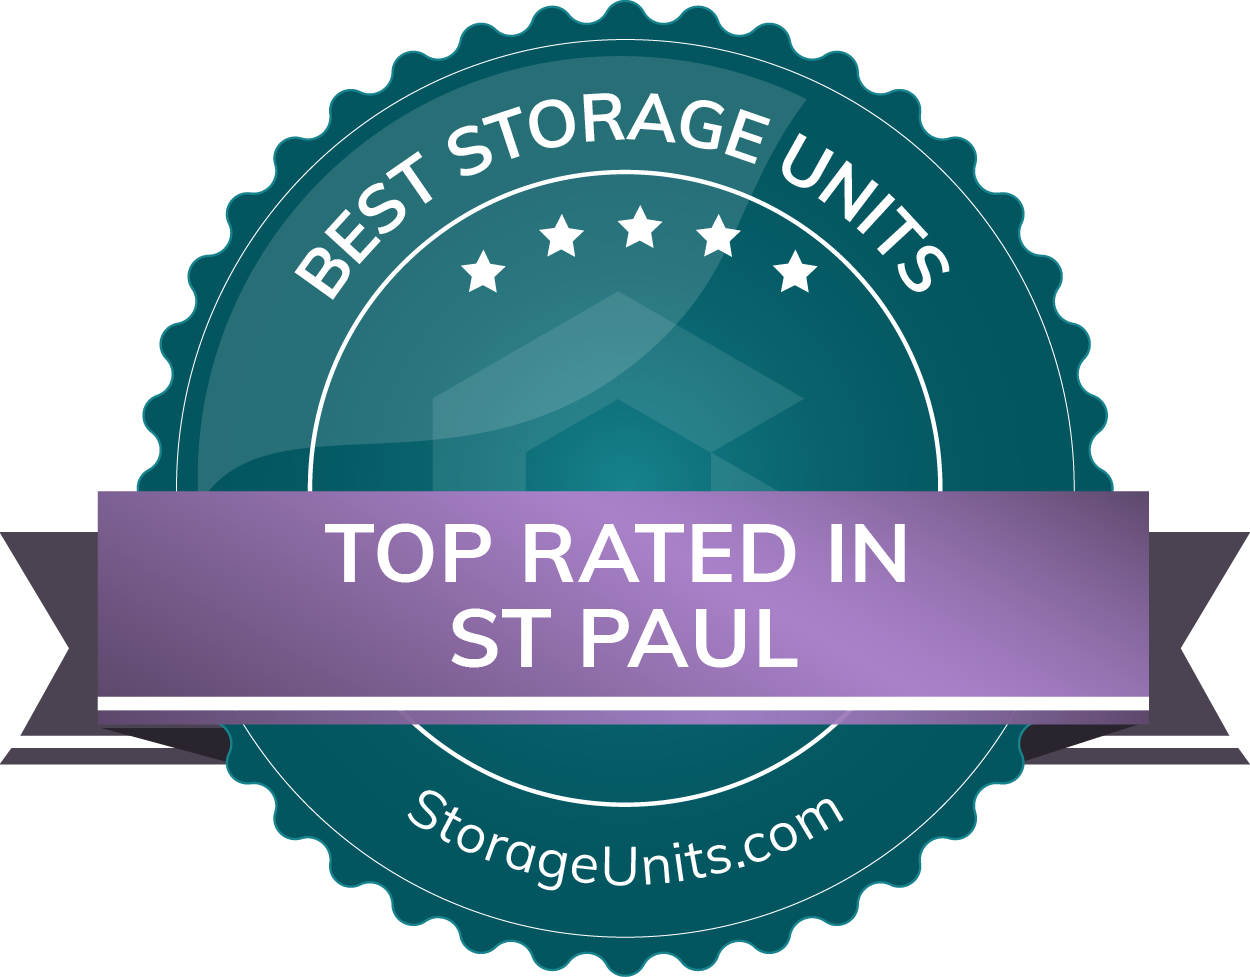 Best Self Storage Units in St. Paul, Minnesota of 2022